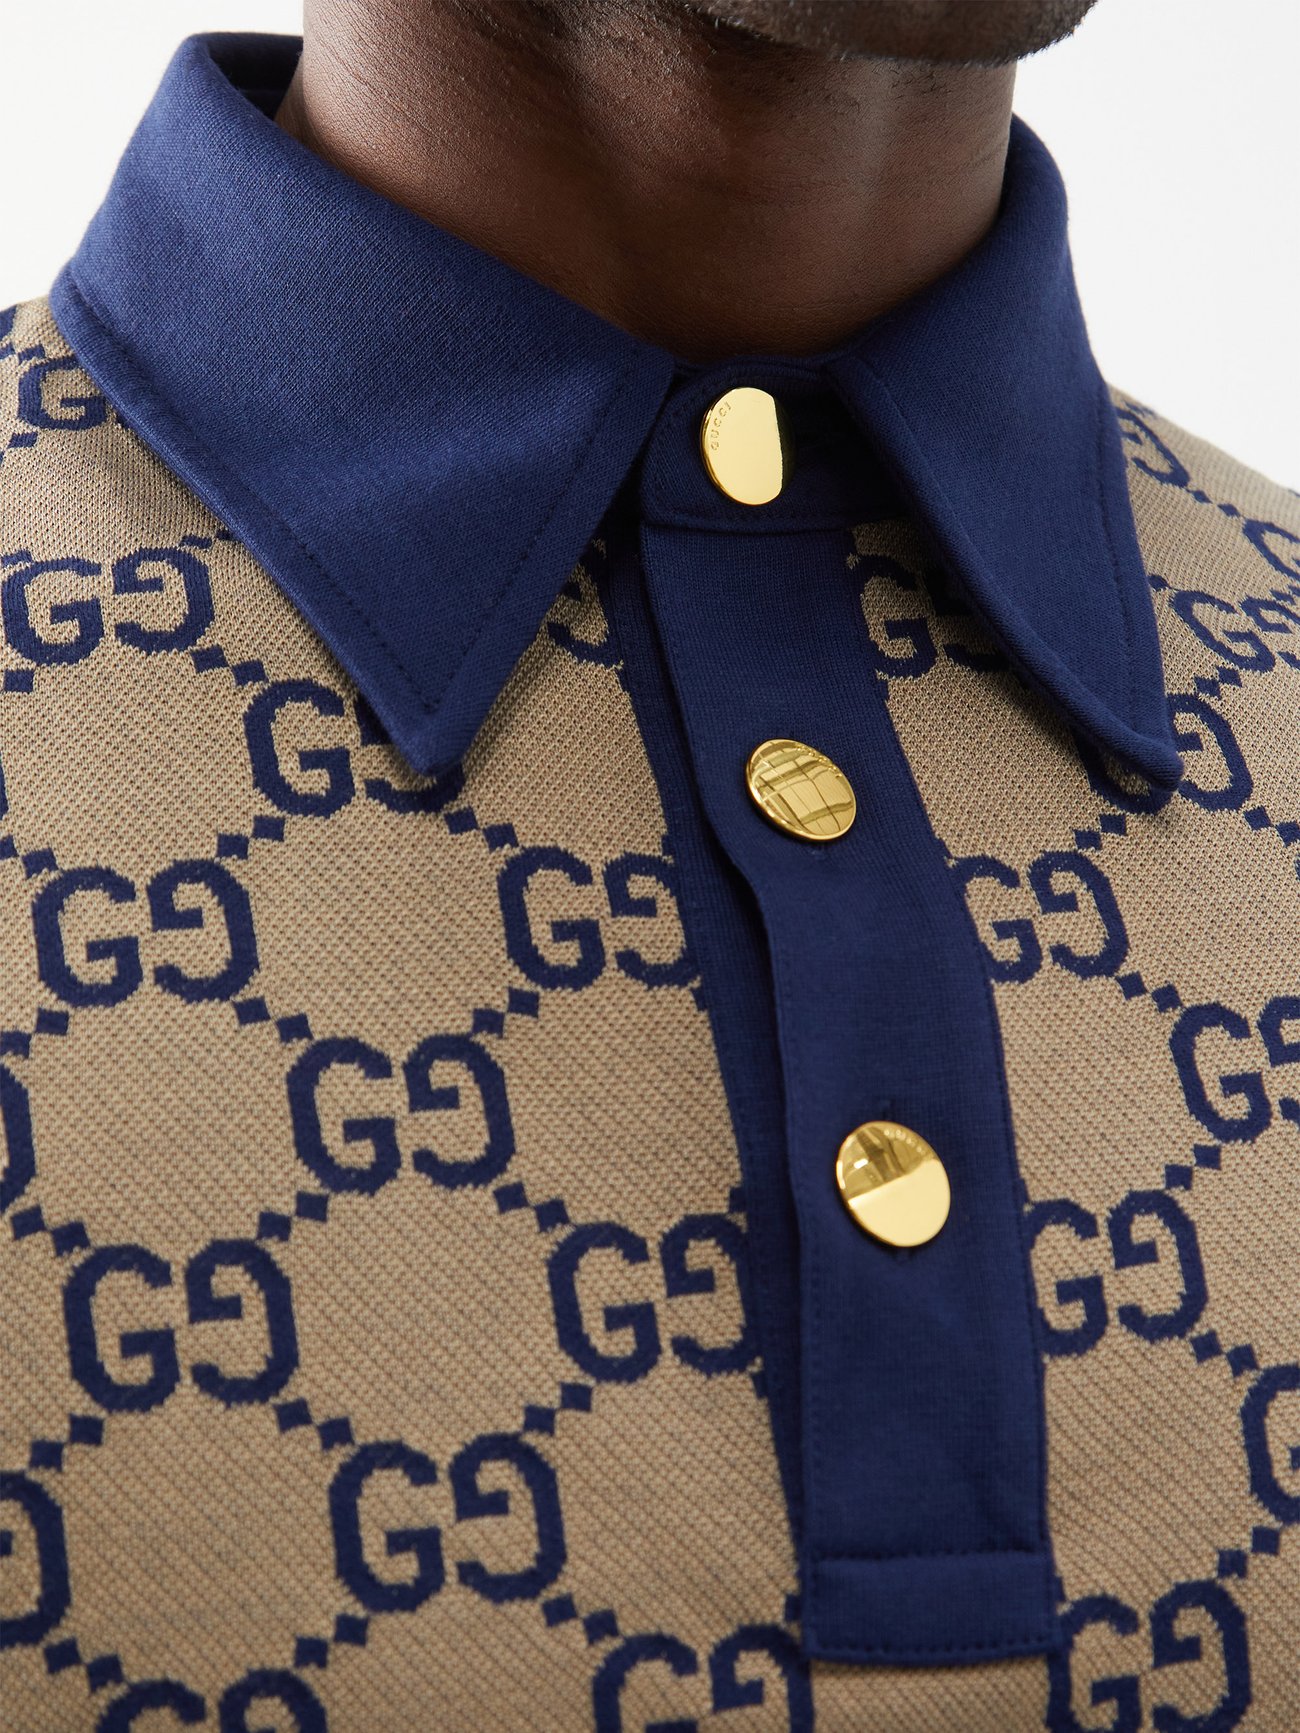 Gucci - Men - Jacquard-knit Polo Shirt Blue - L